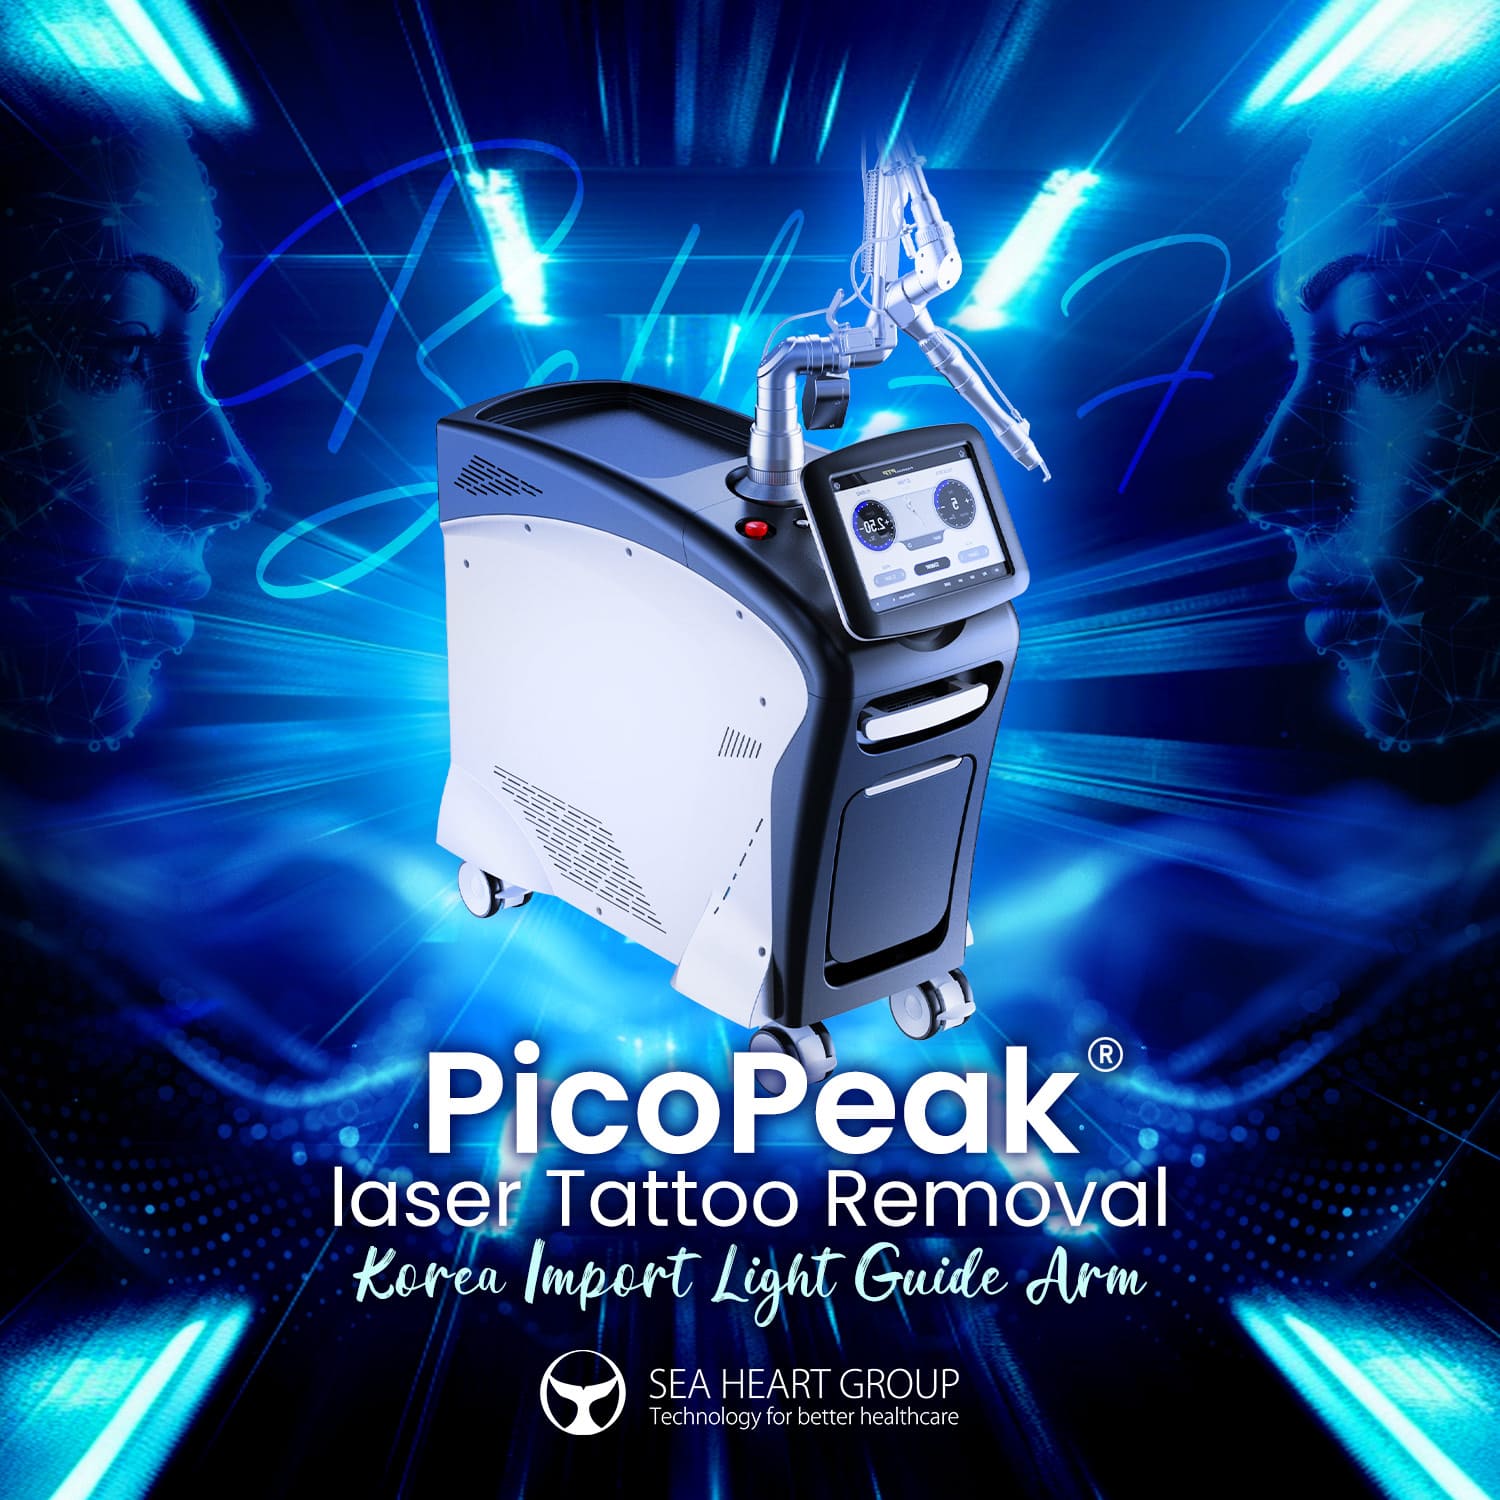 picopeak picosecond laser machine by sea heart group